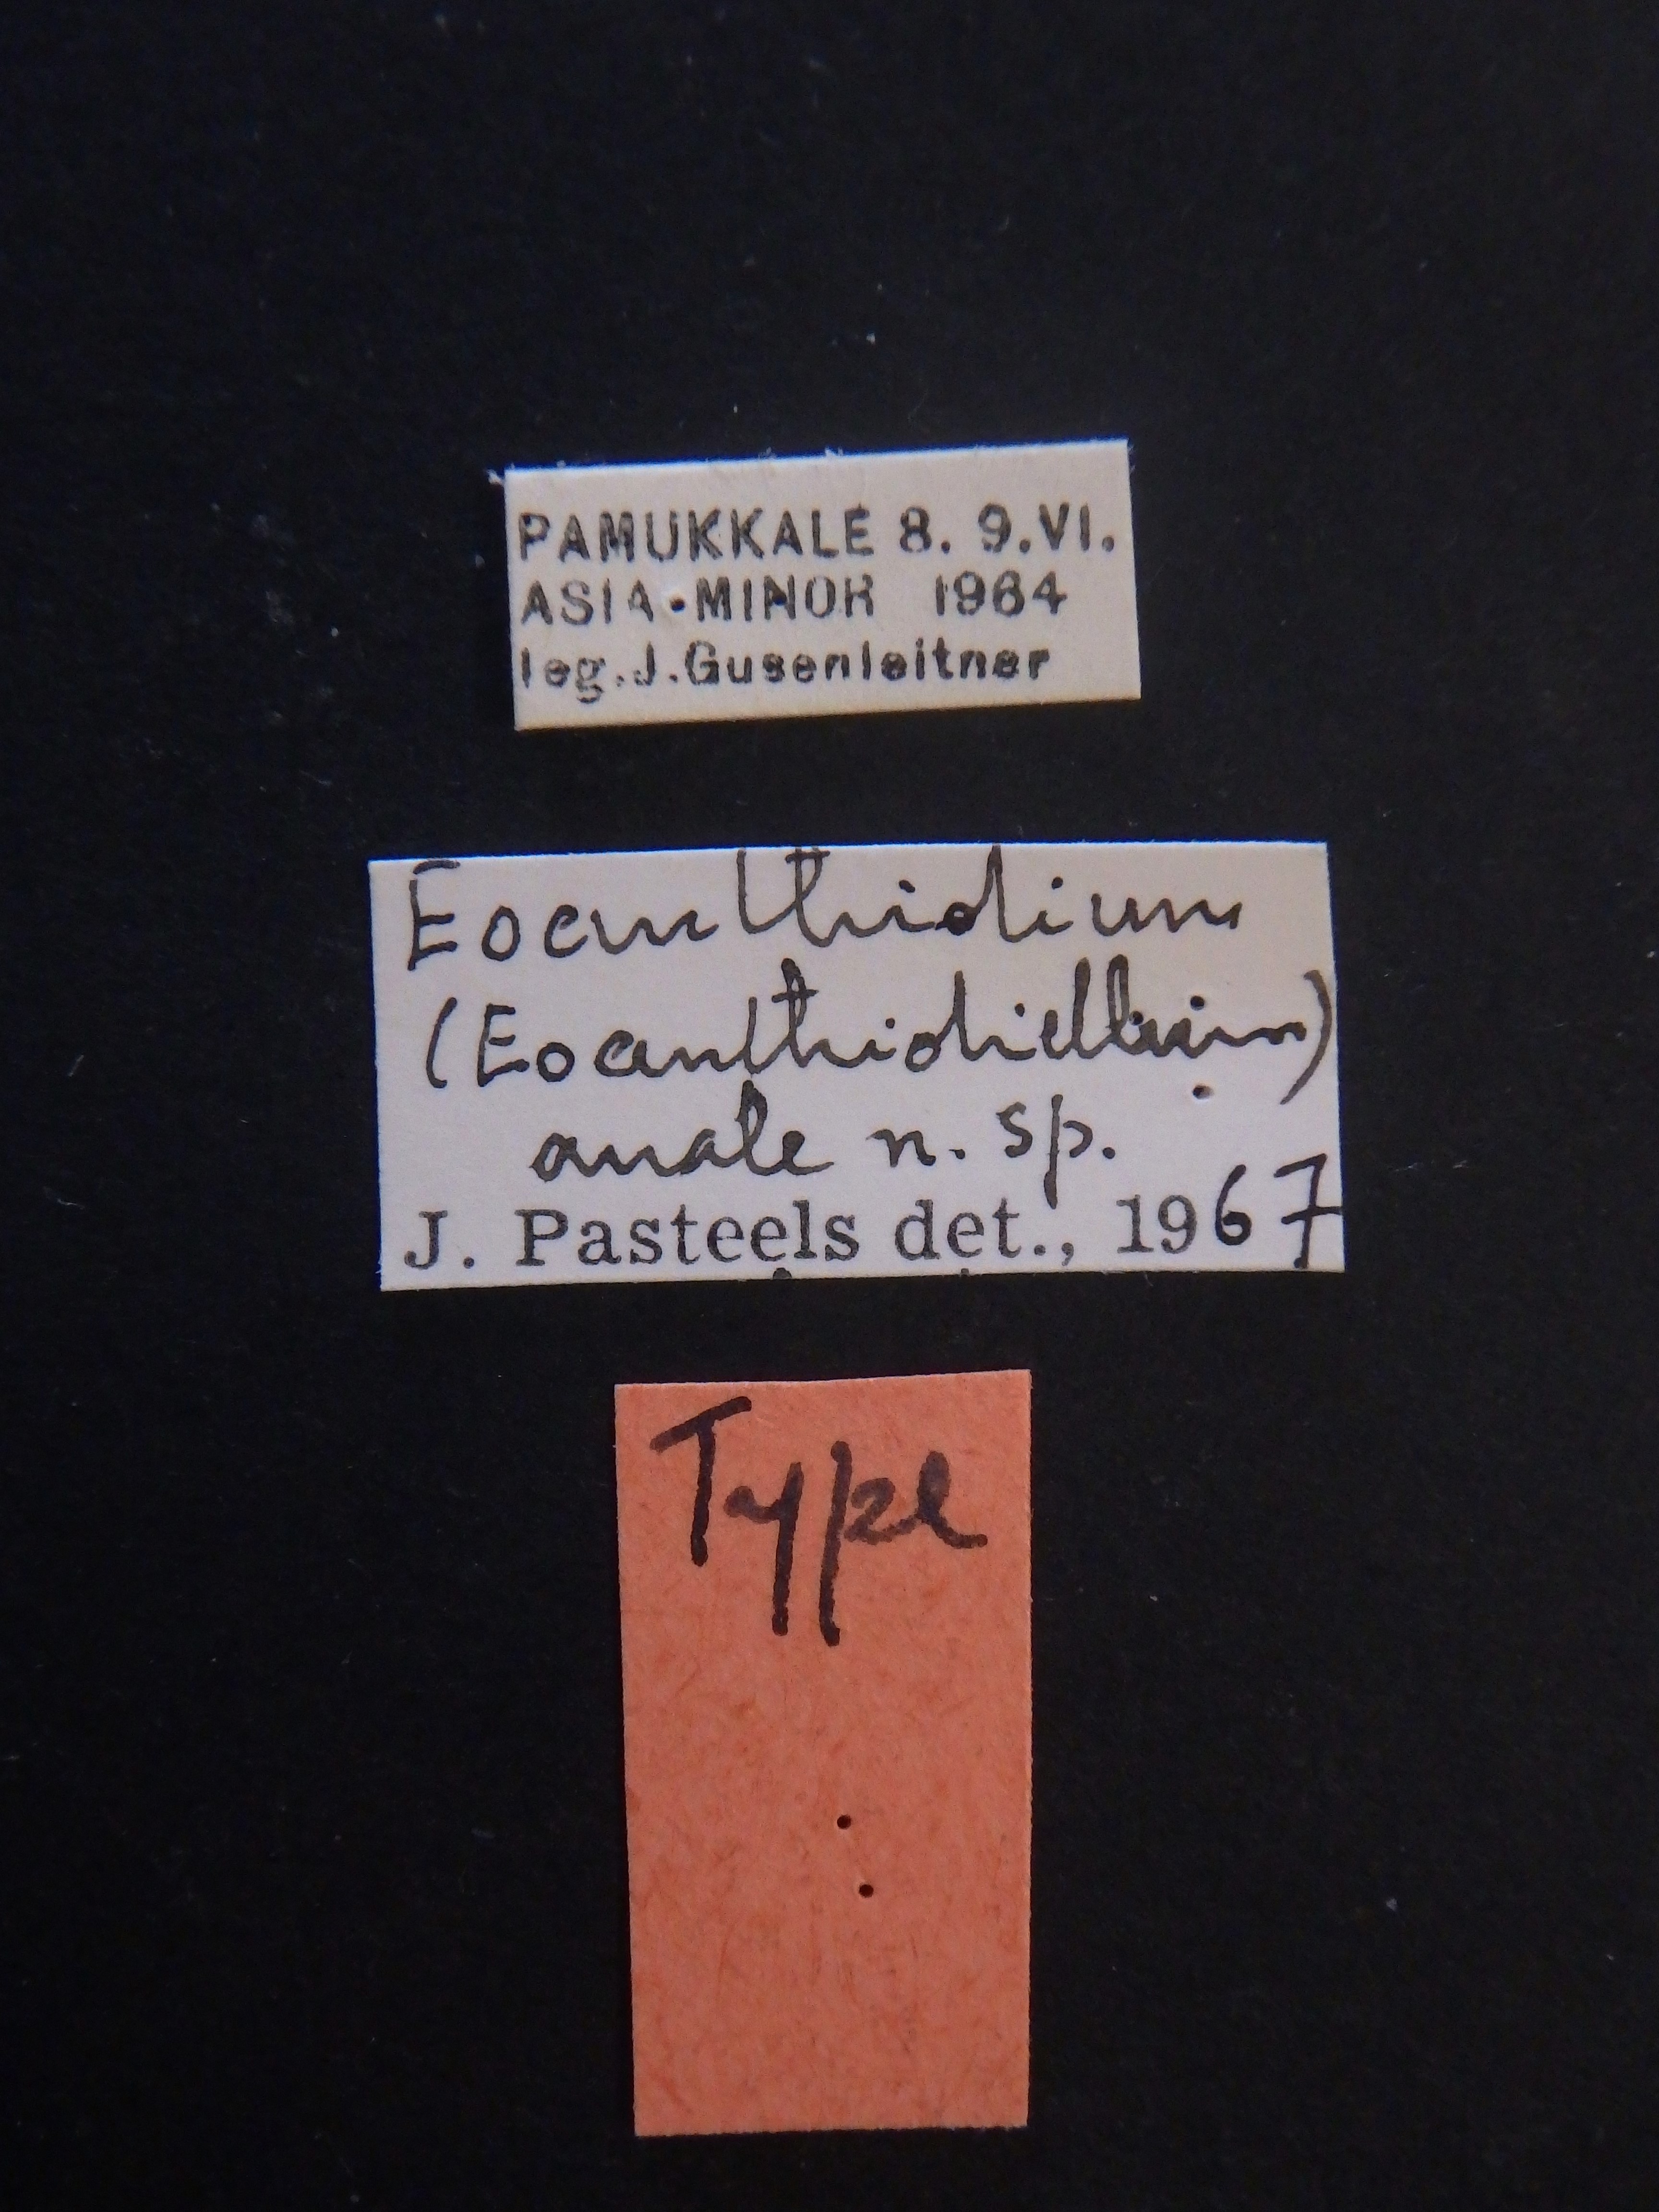 Eoanthidium (Eoanthidiellum) anale t Labels.JPG